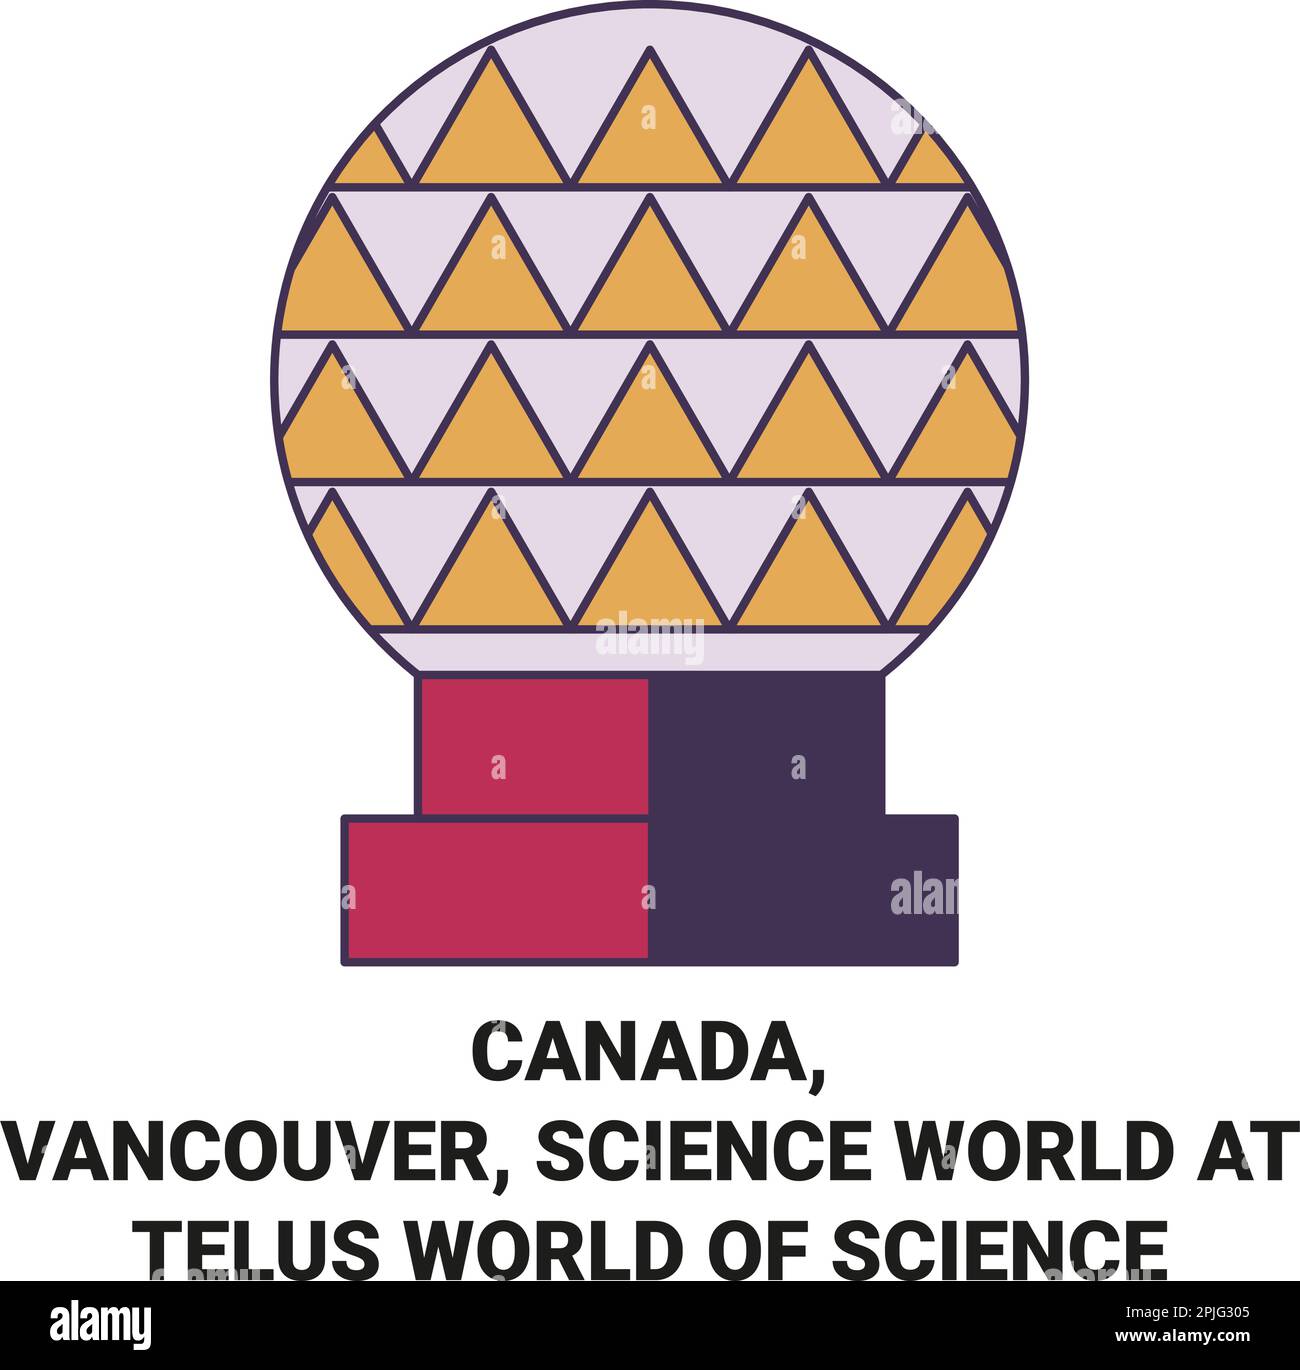 Canada, Vancouver, Science World At Telus World Of Science travel landmark vector illustration Stock Vector